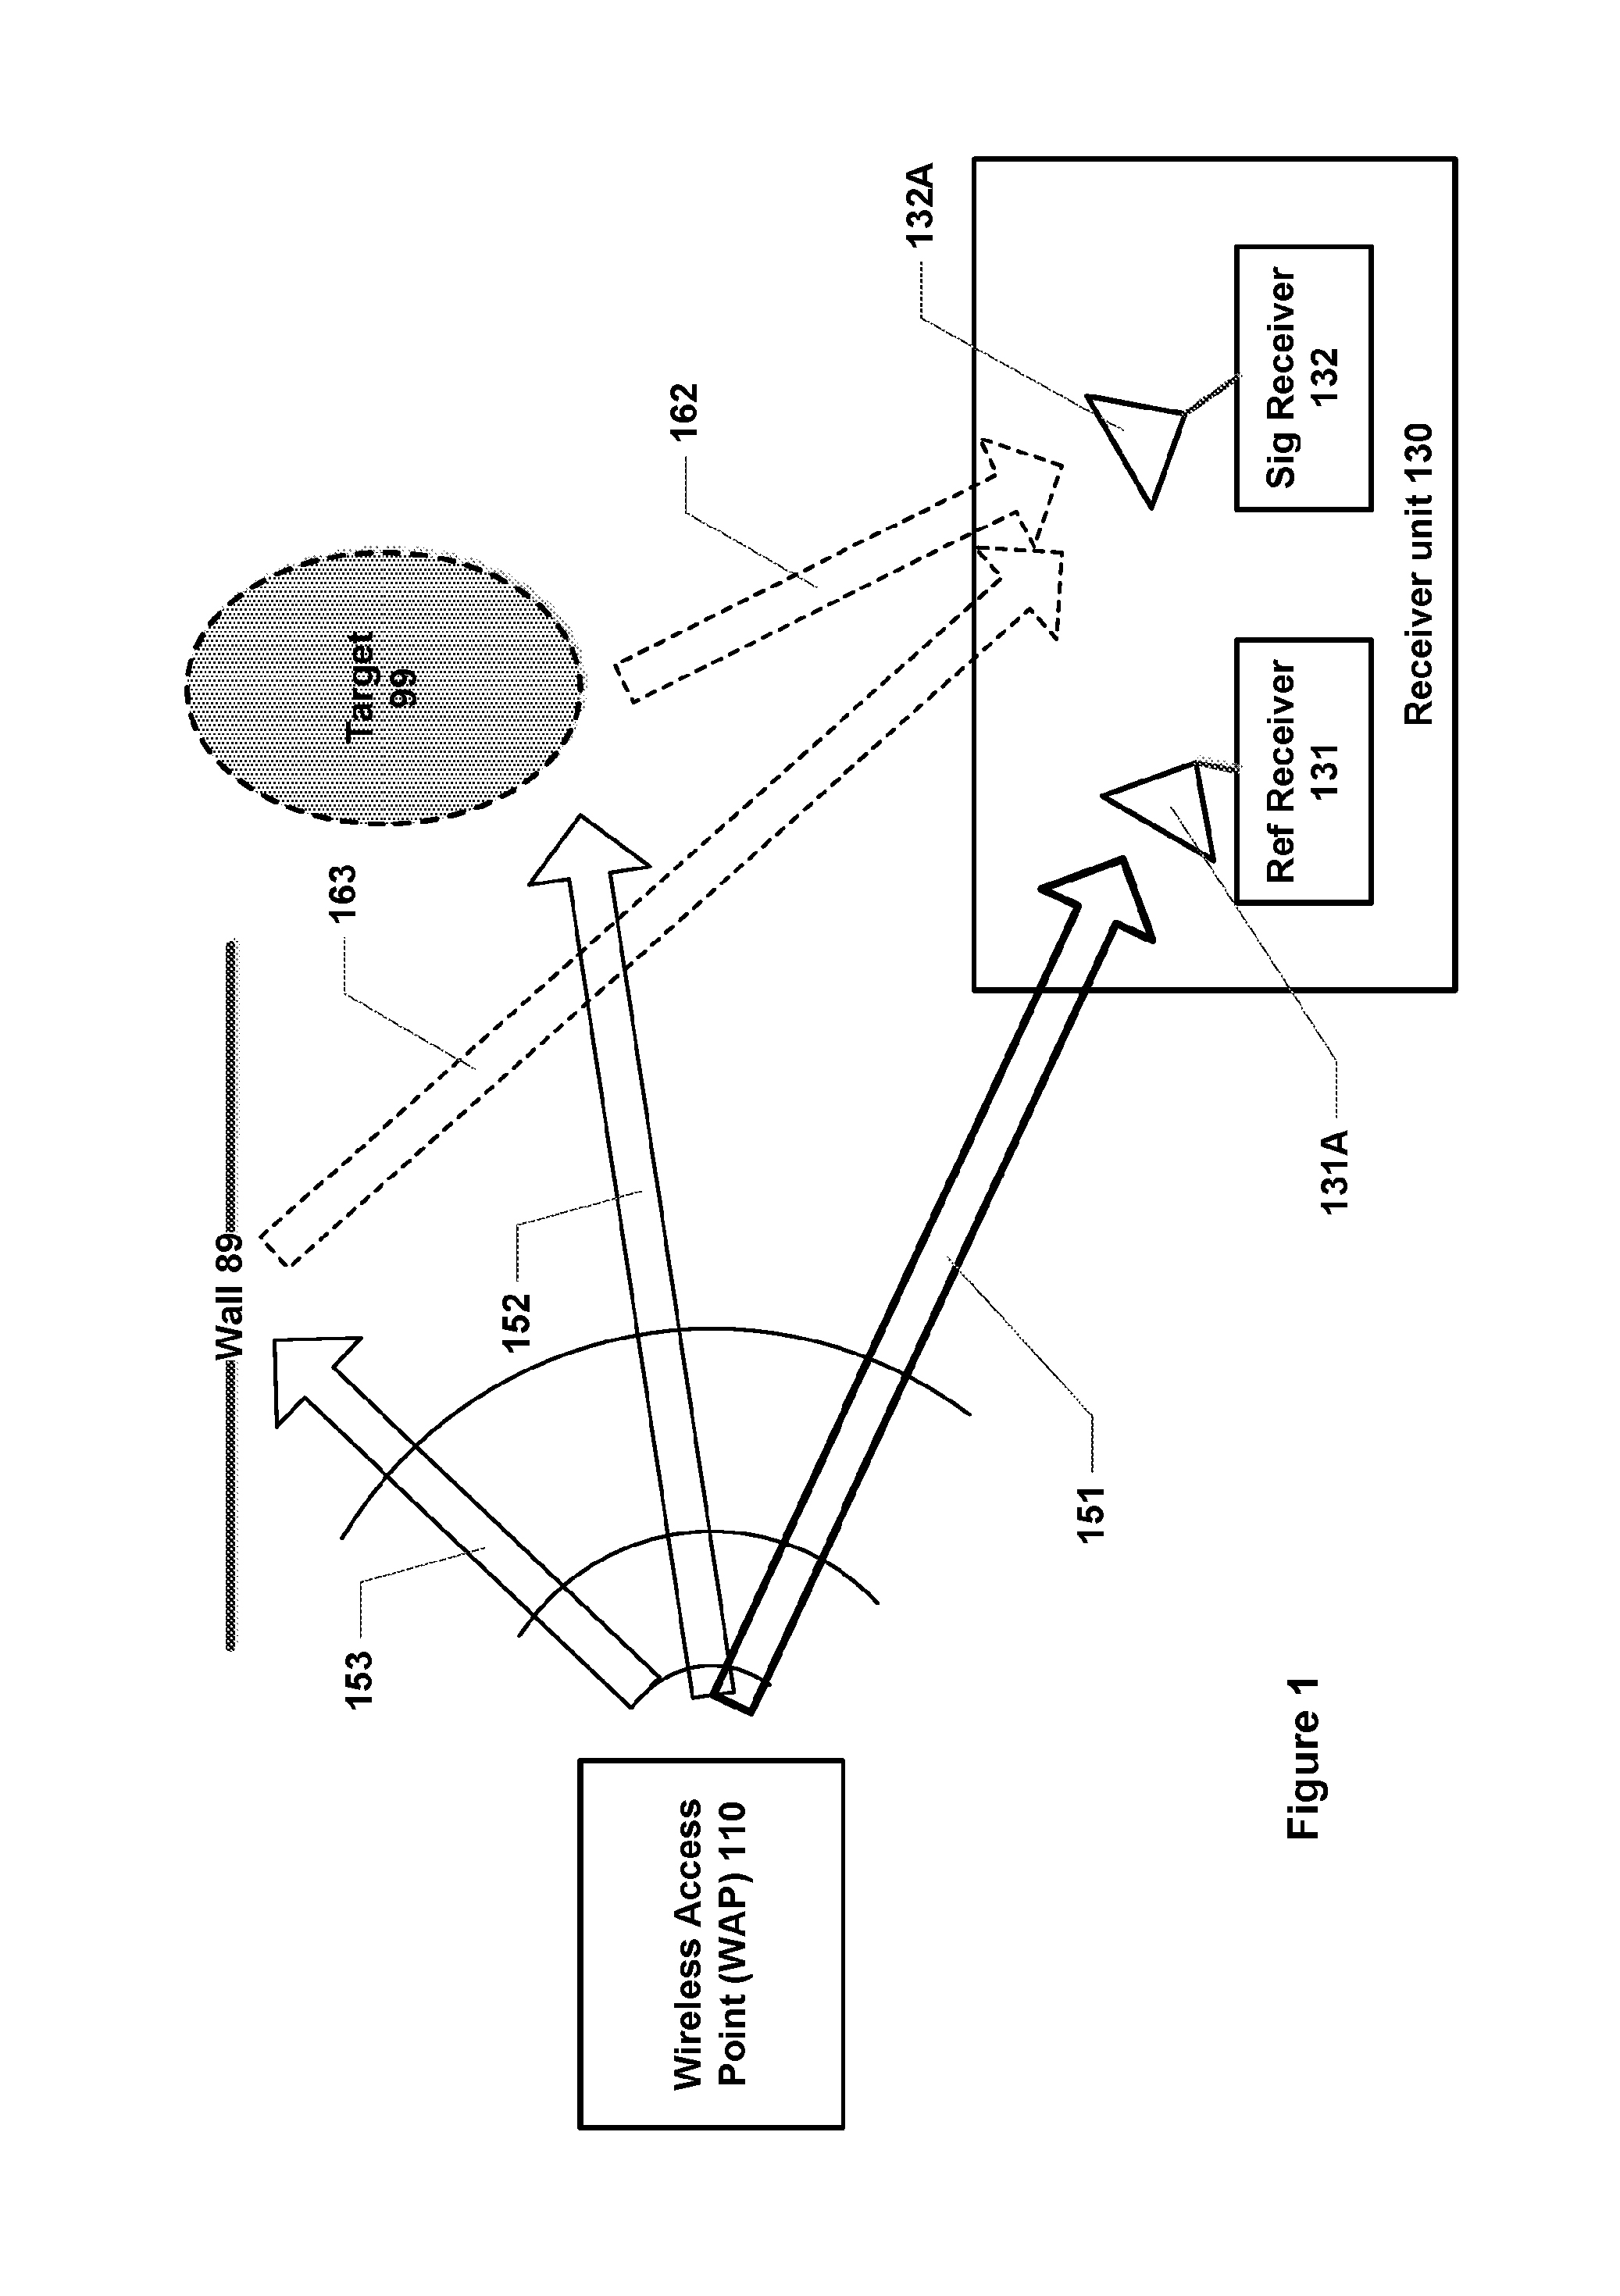 Apparatus and method for performing passive sensing